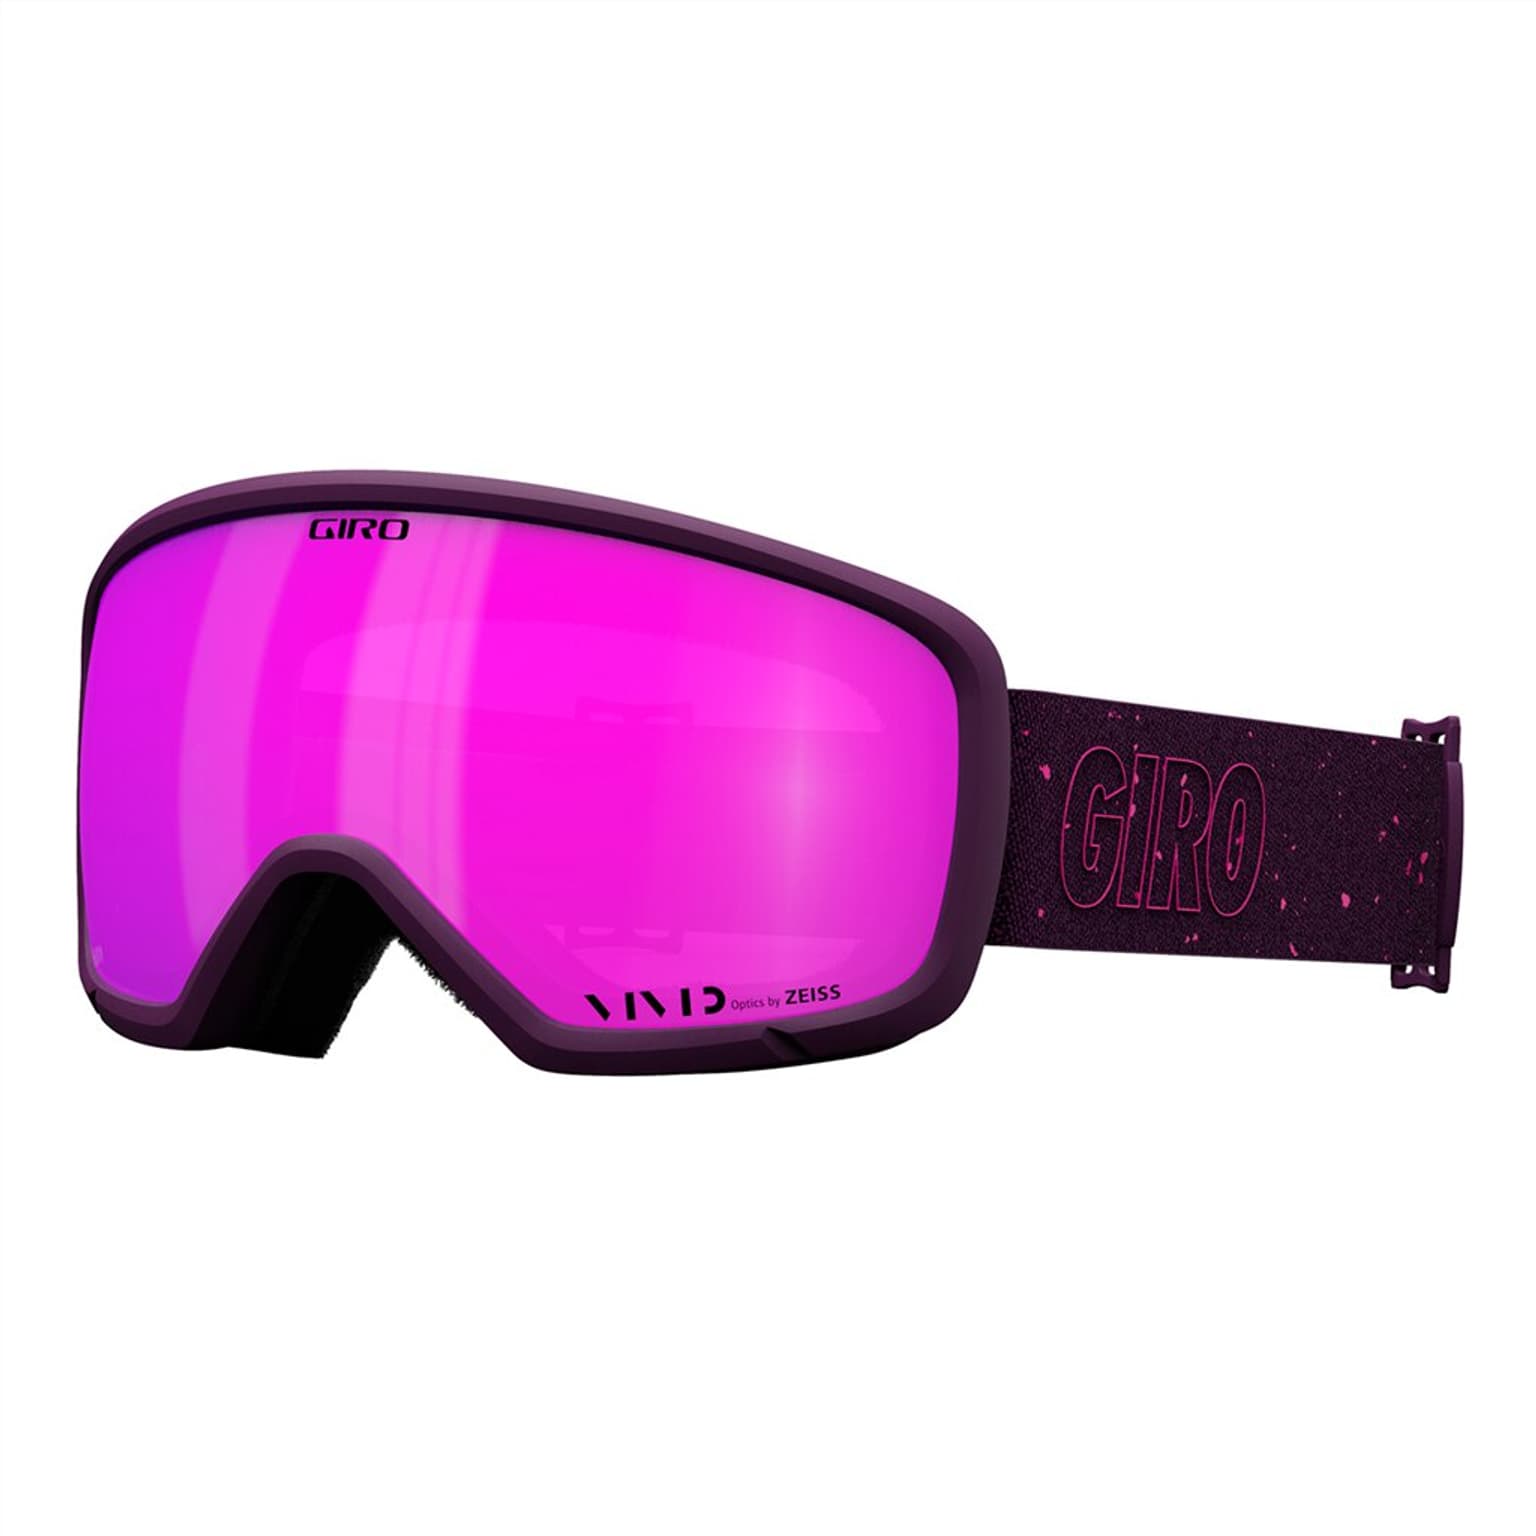 Giro Giro Millie VIVID Skibrille violet 1